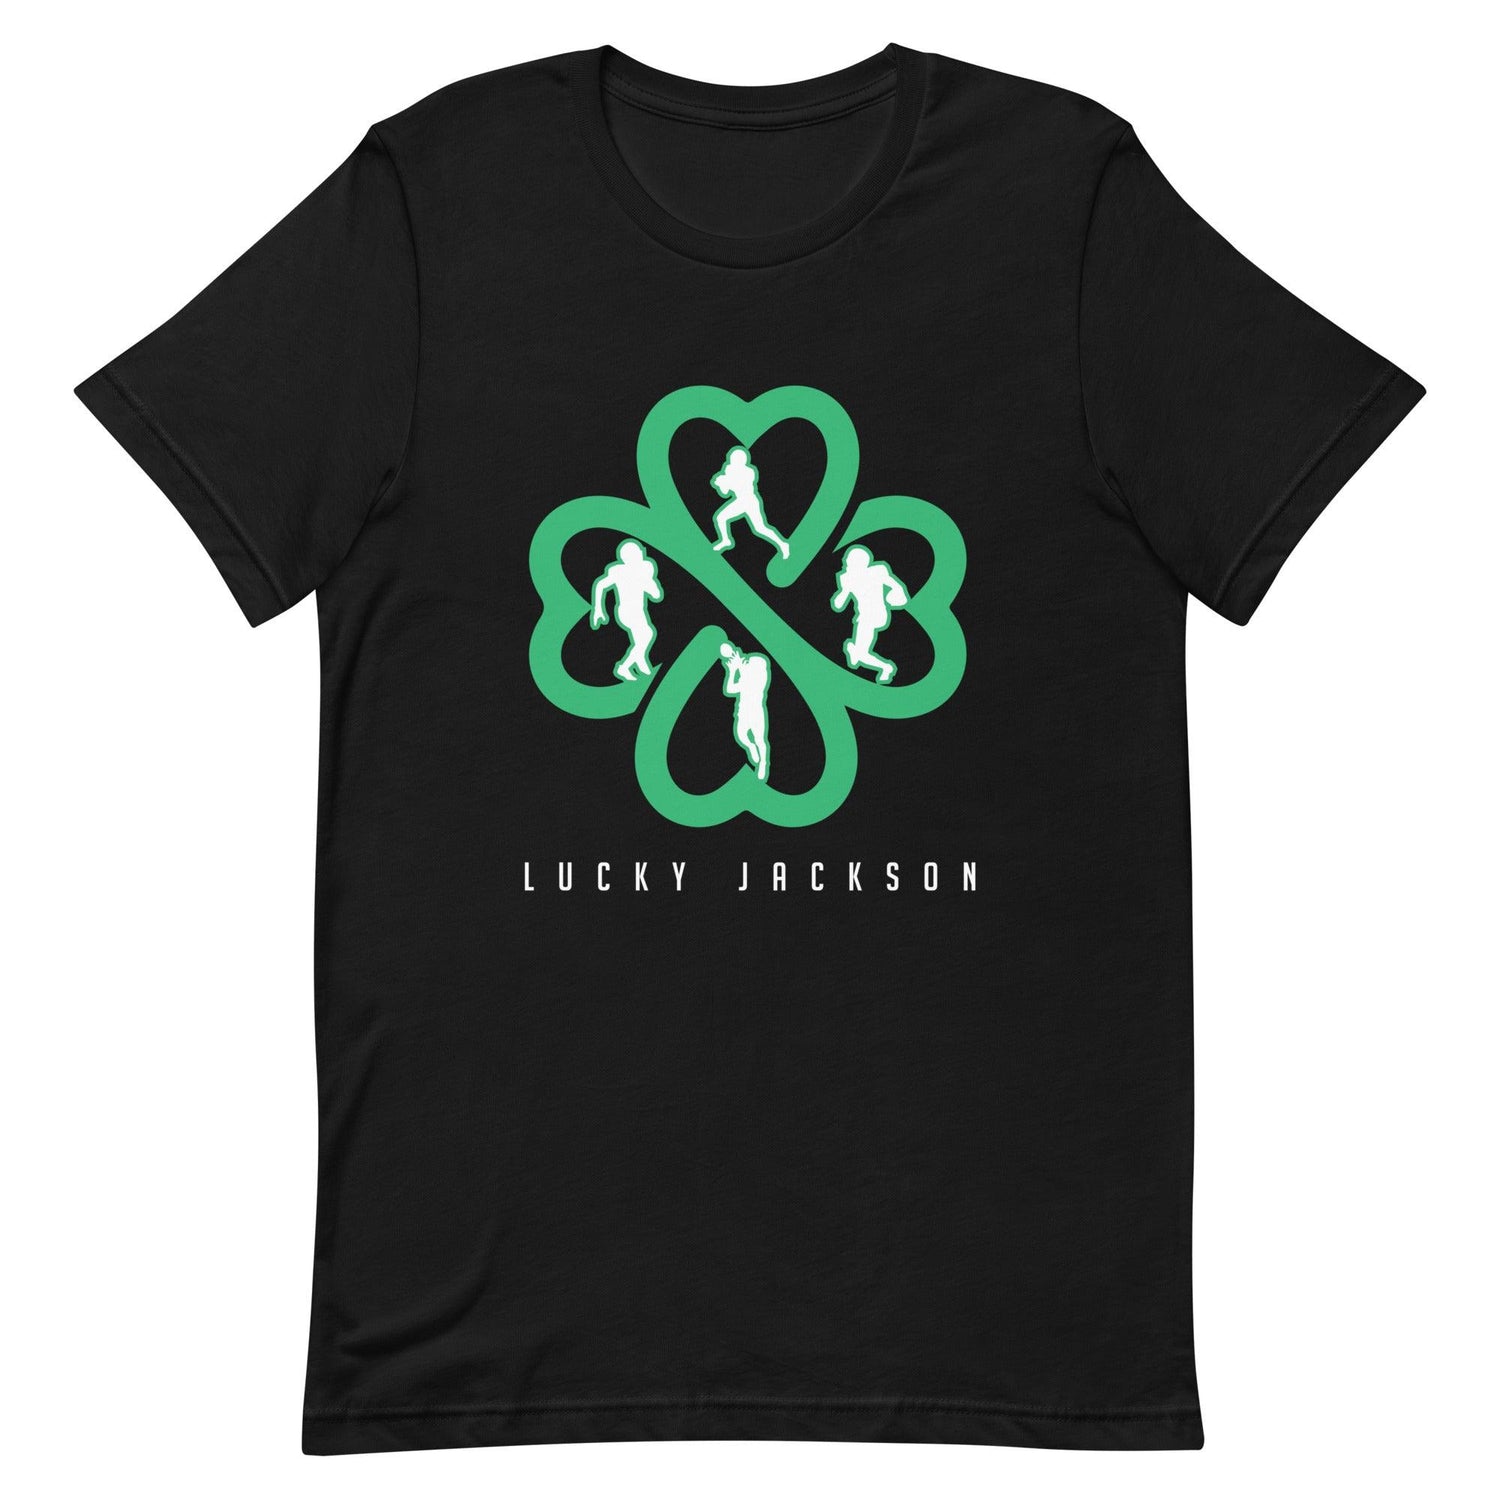 Lucky Jackson "Elite" t-shirt - Fan Arch